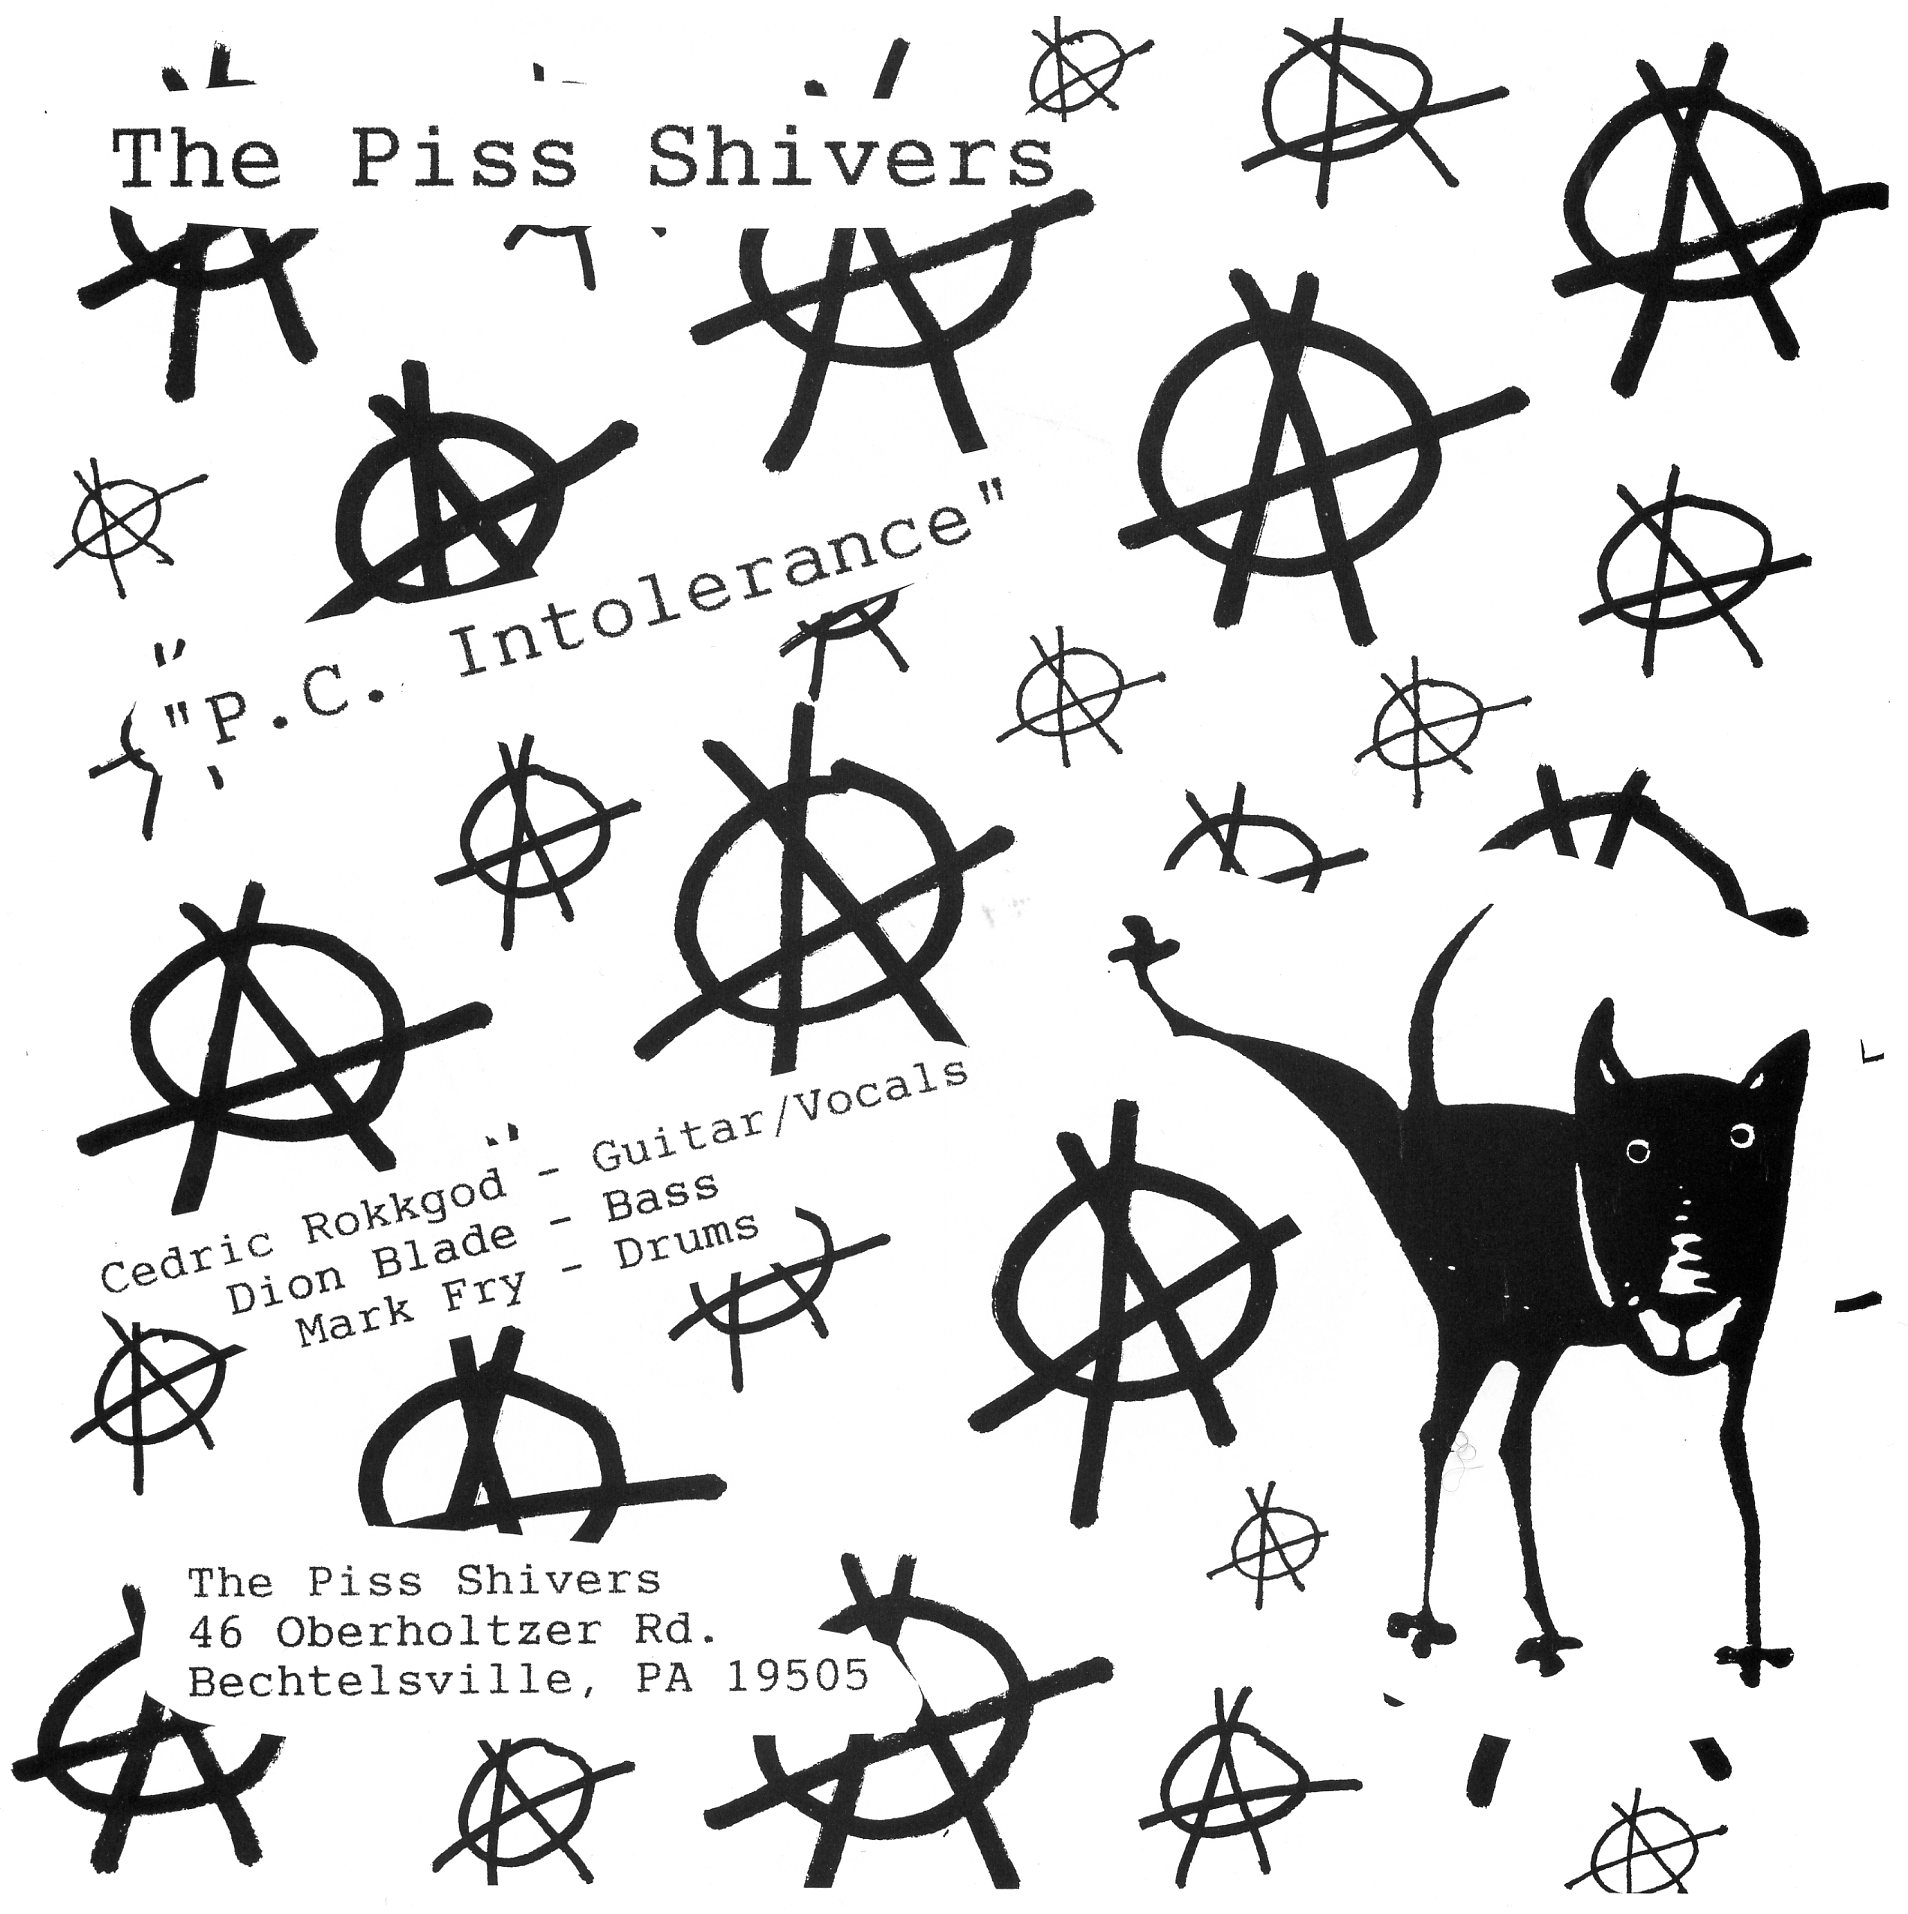 Piss Shivers lyric sheet